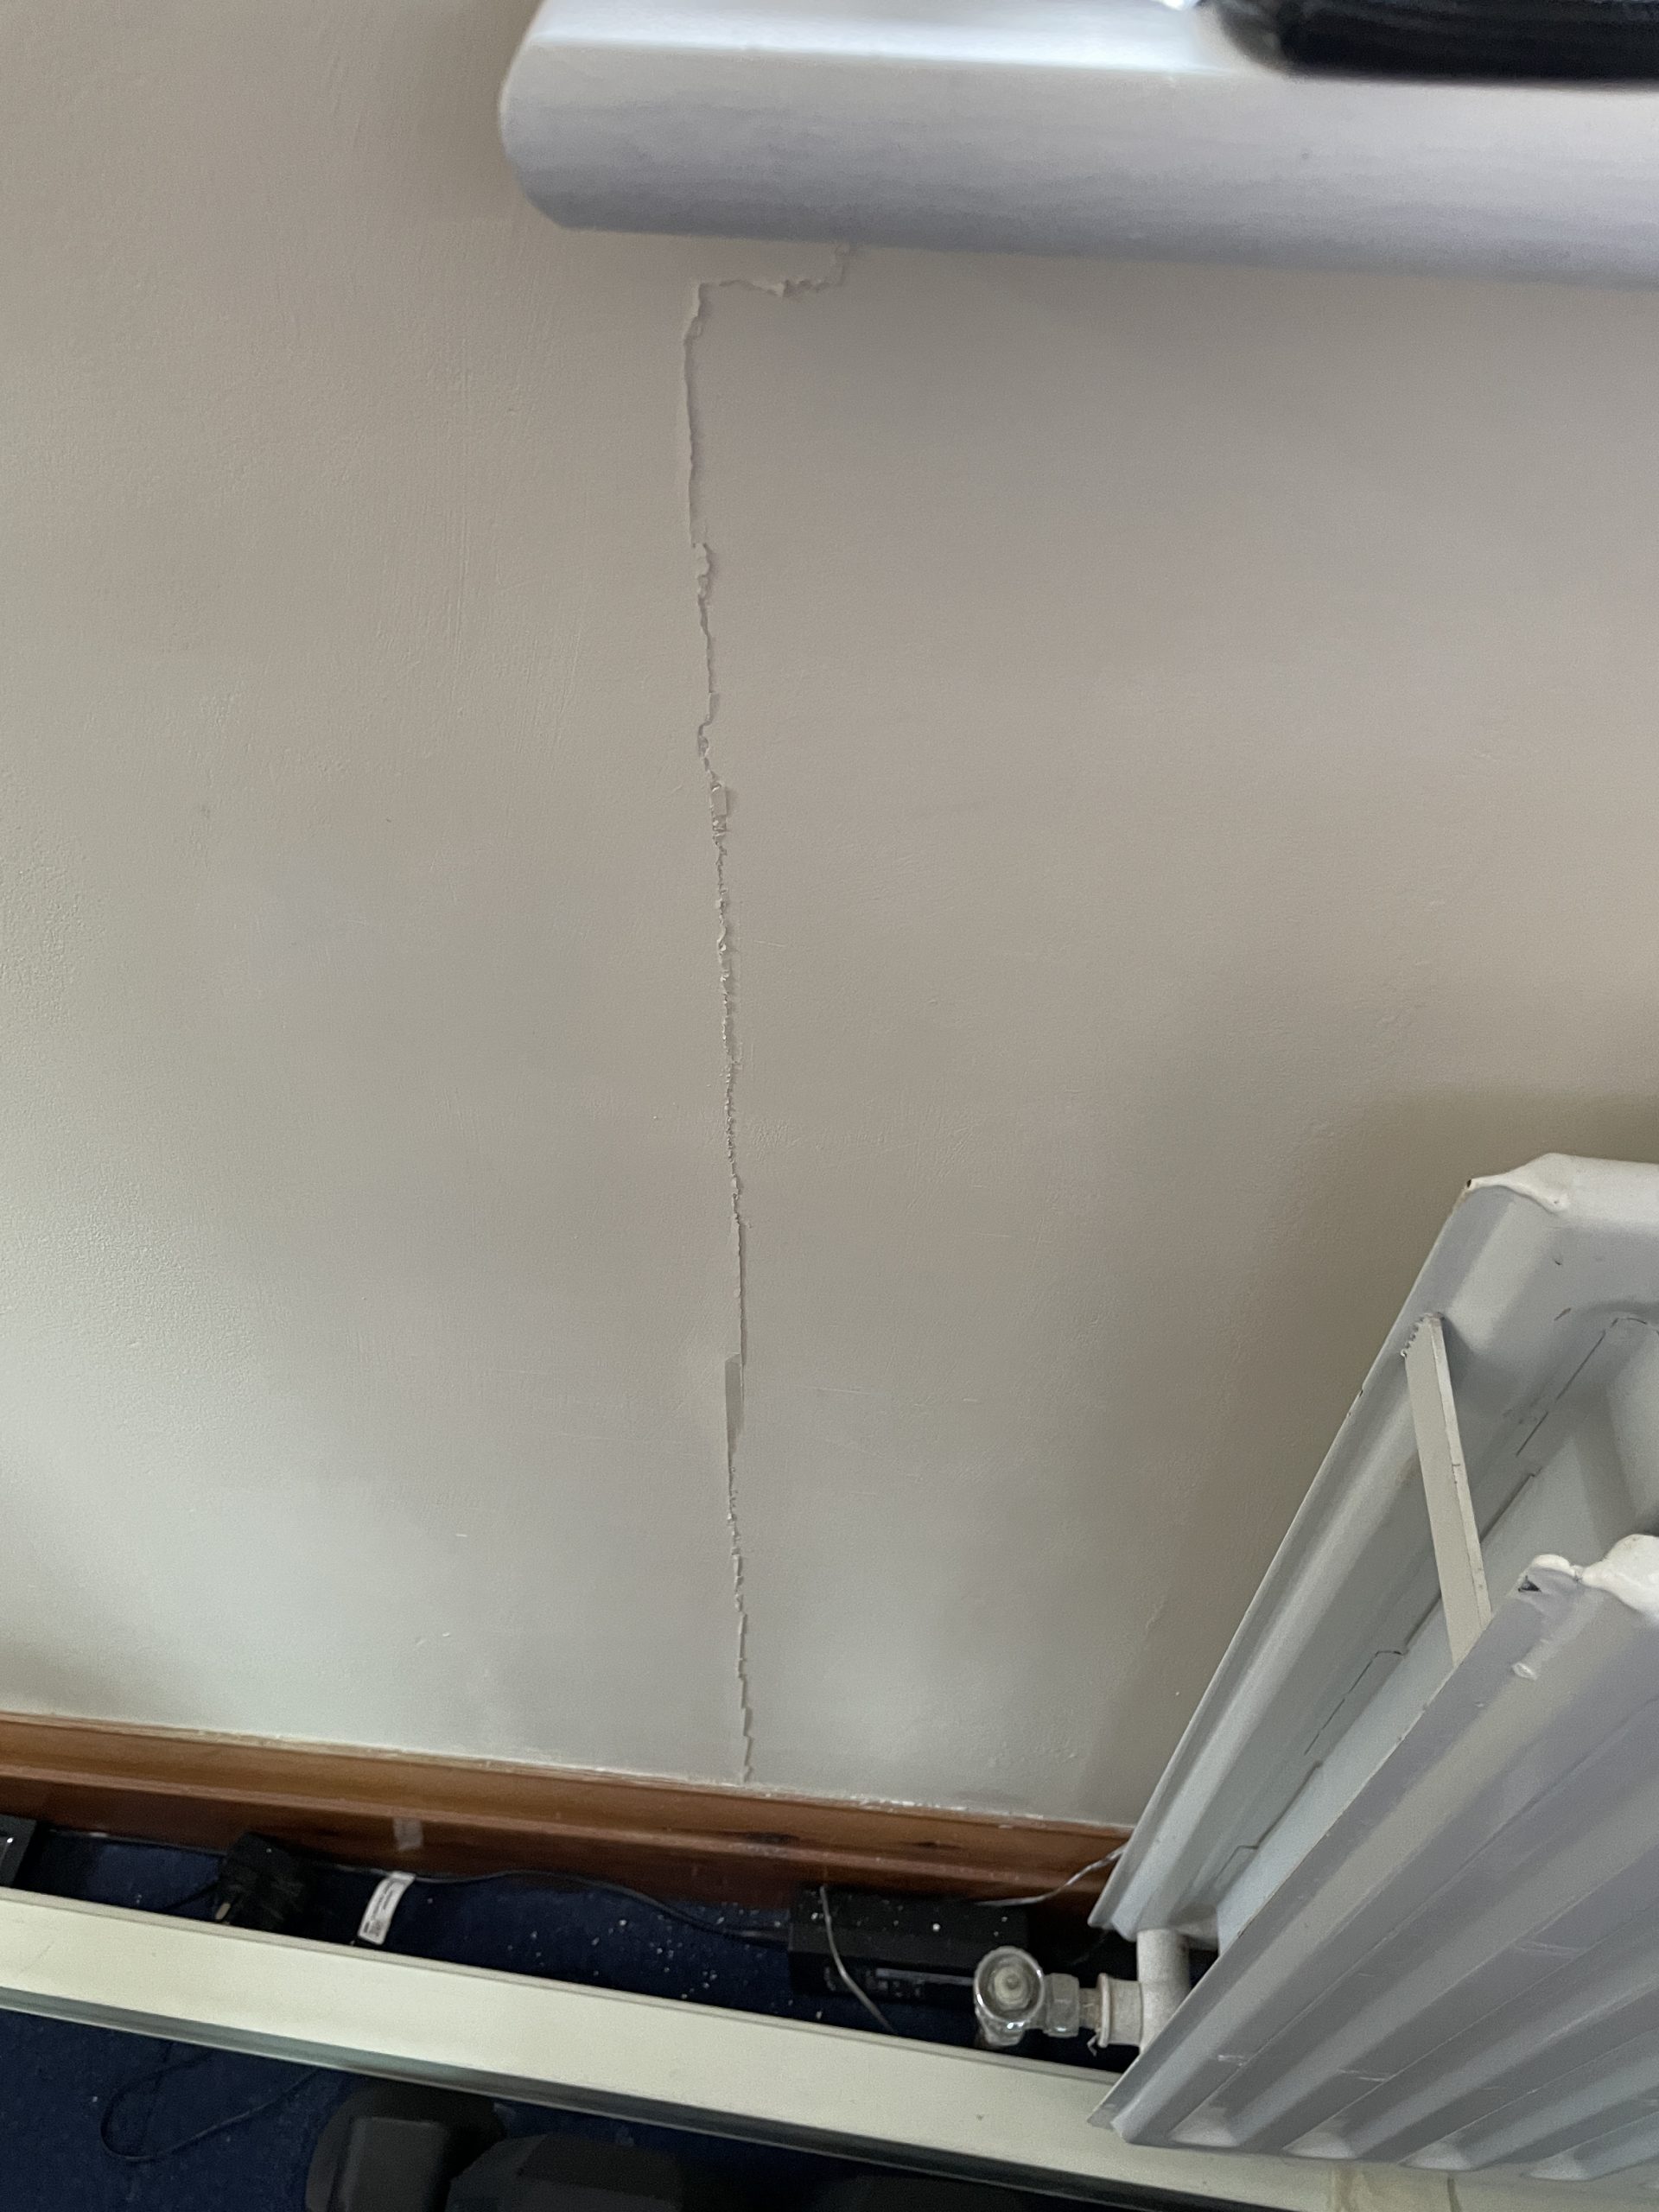 Cracks in a house in Harrow